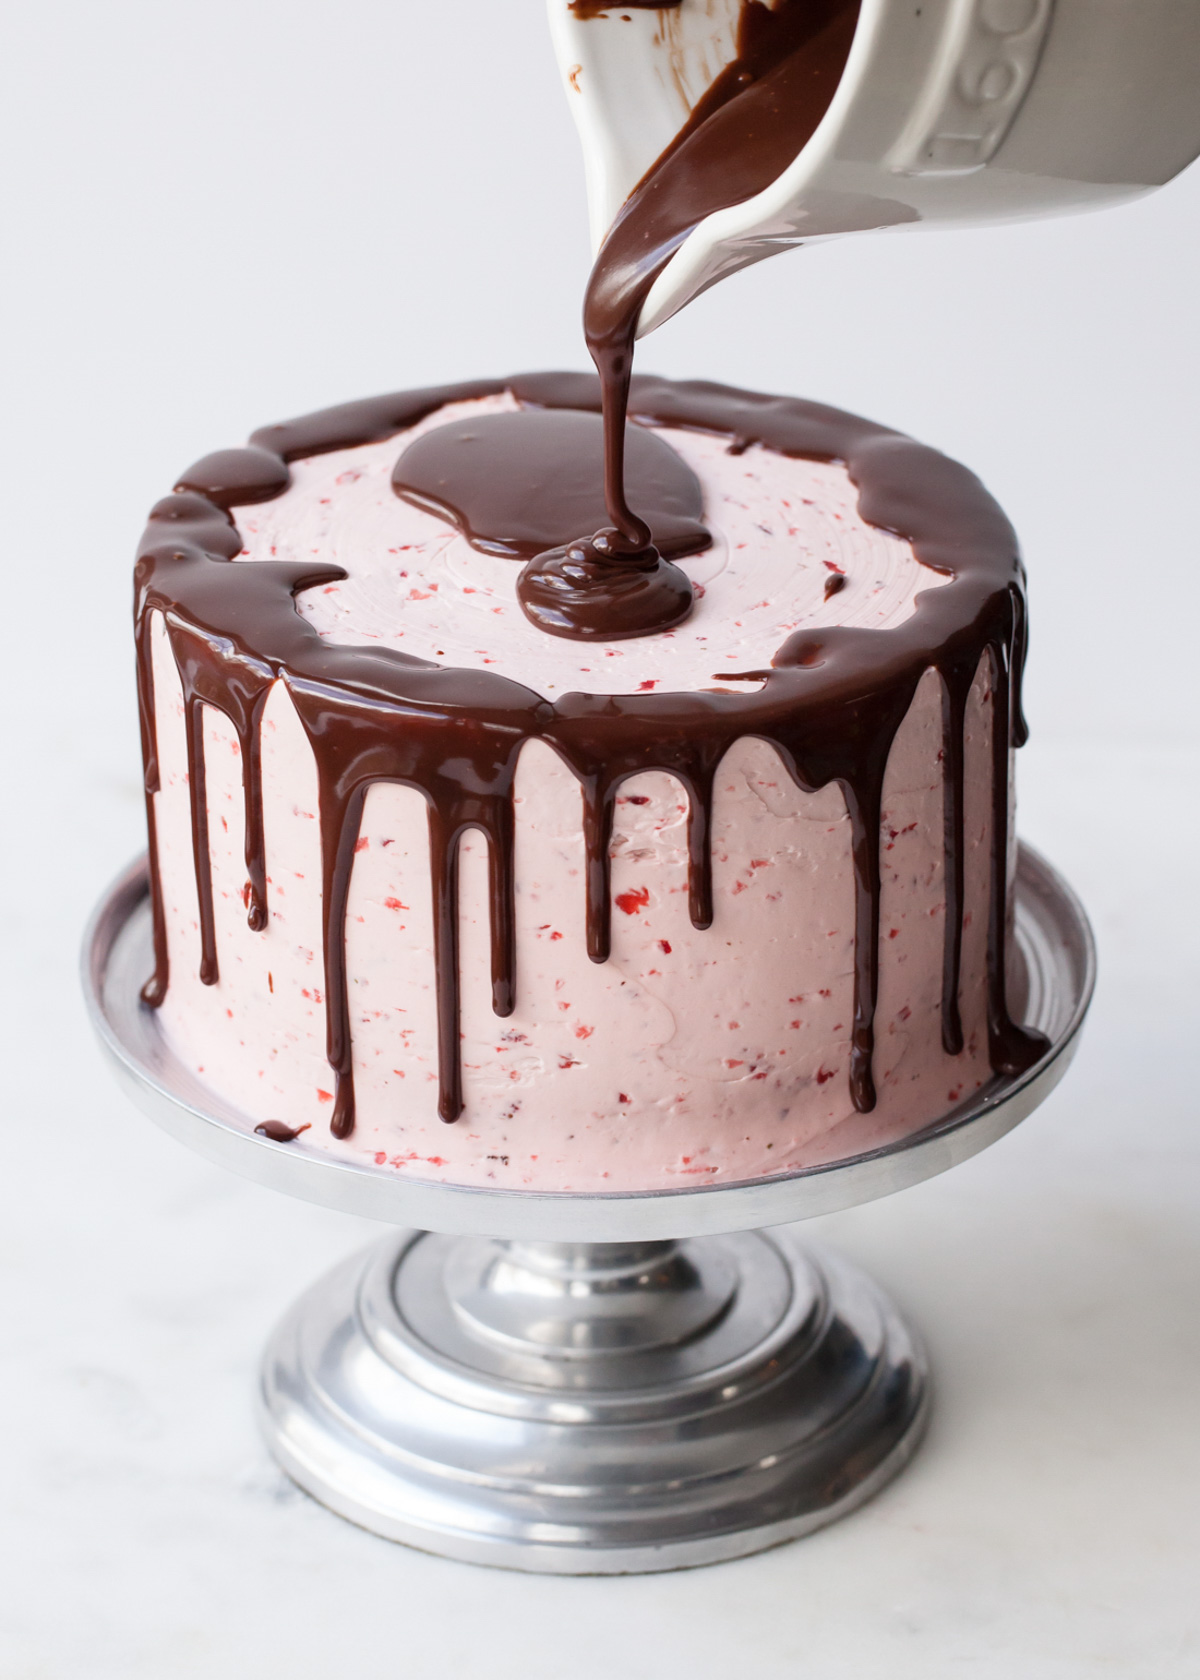 Pour glaze on a chocolate drip cake